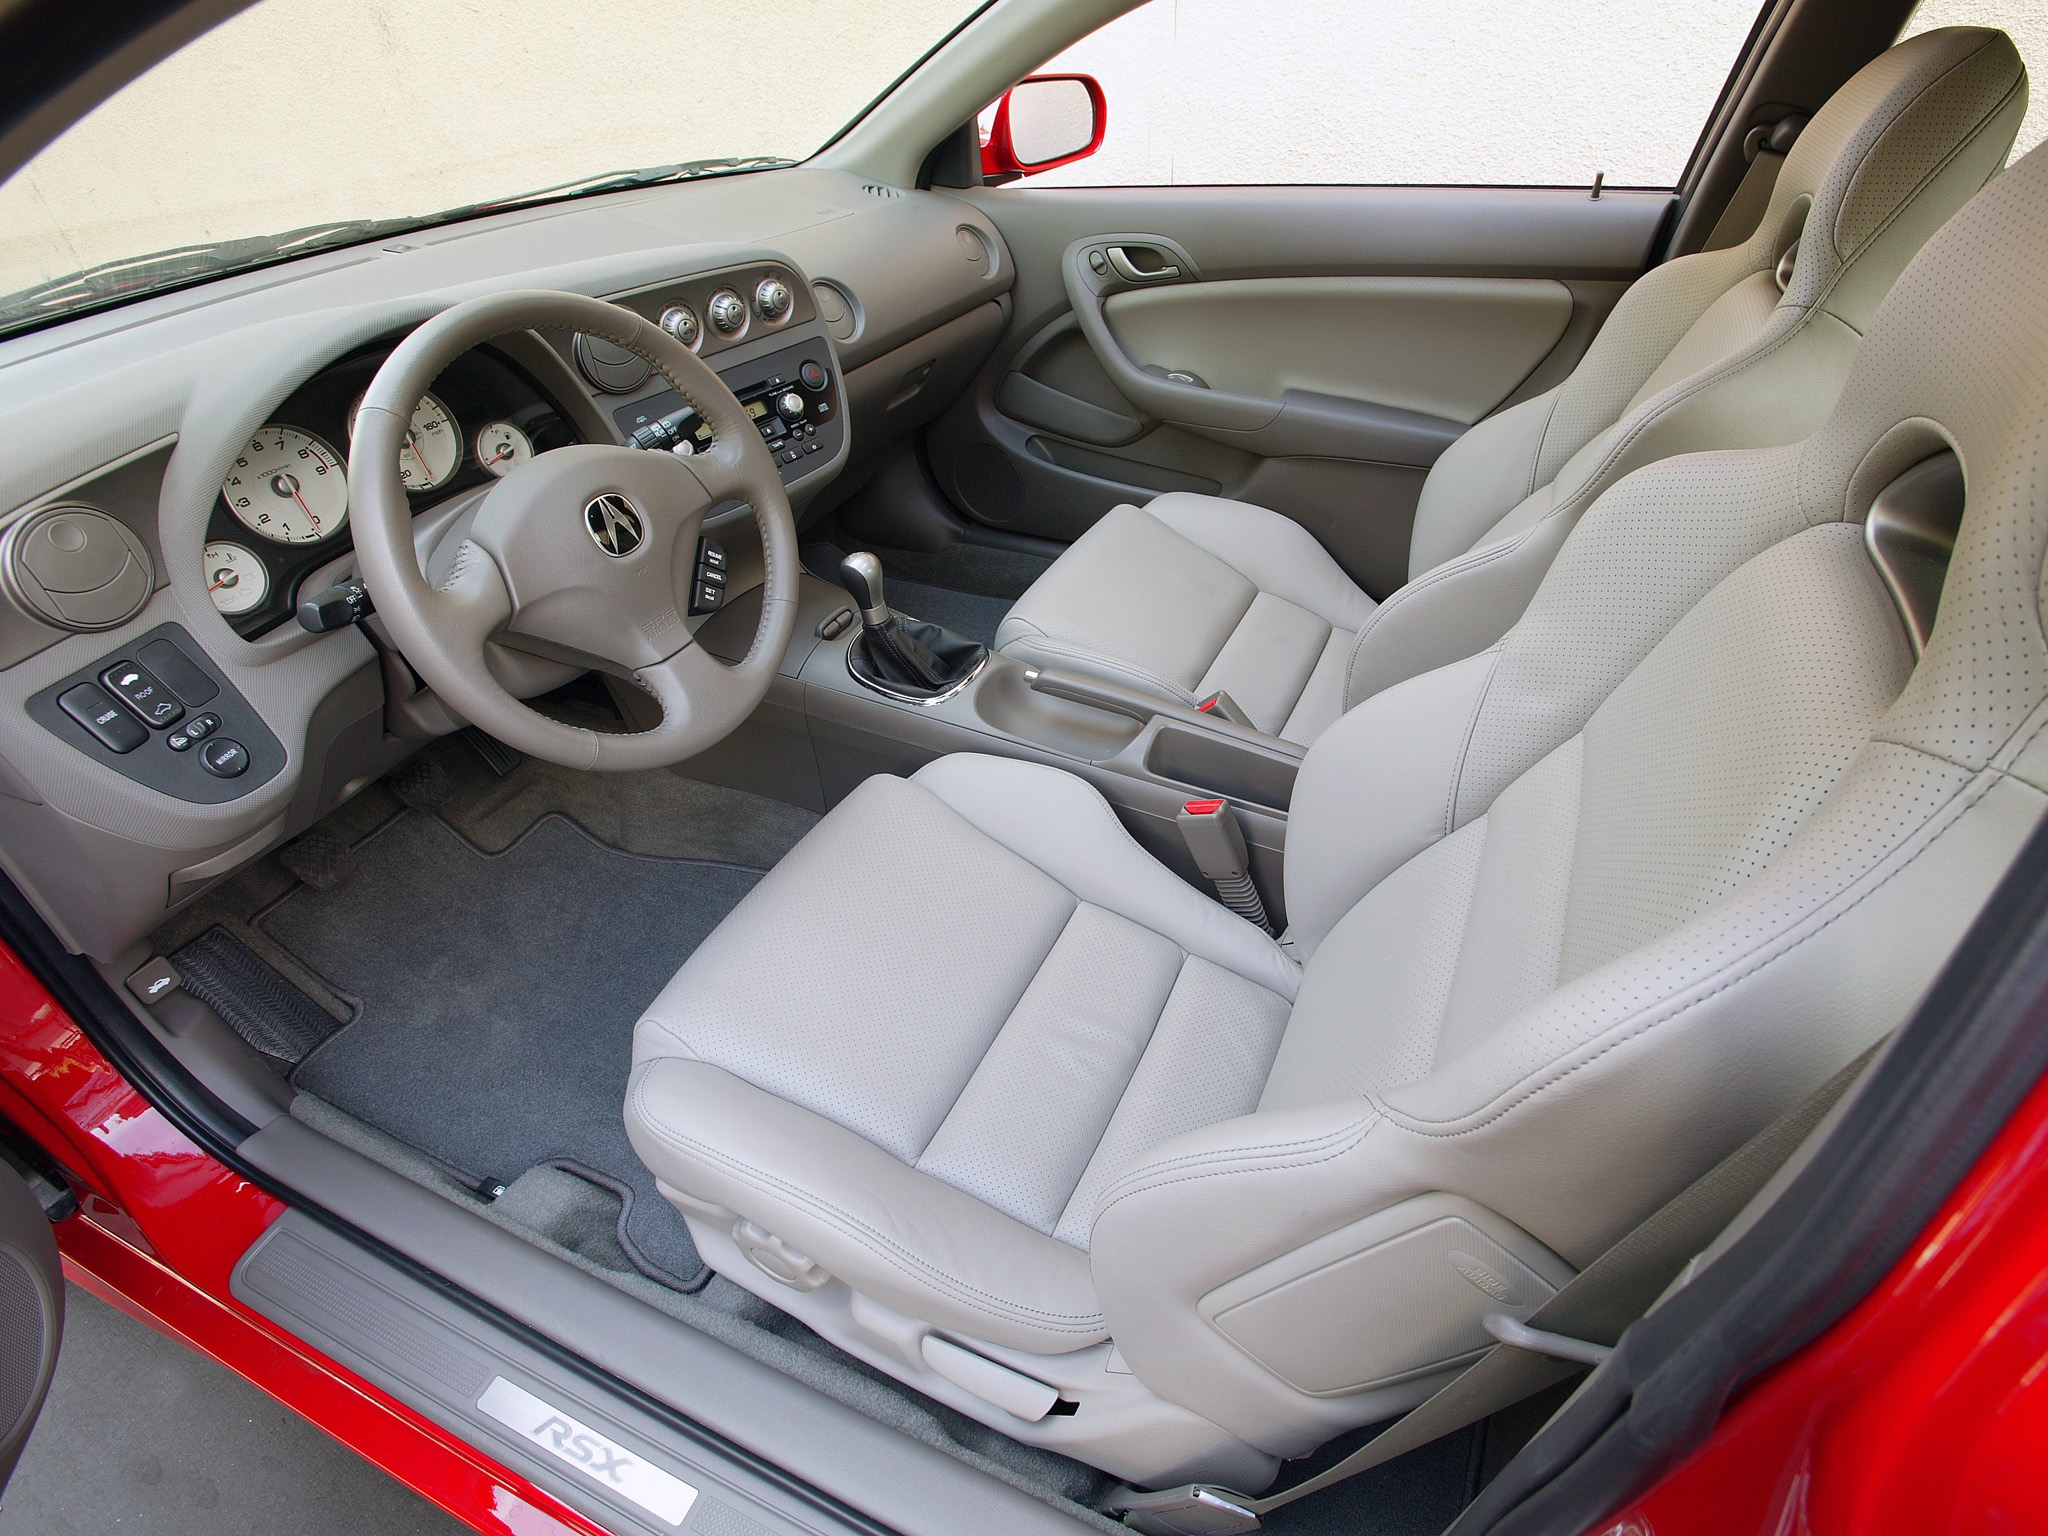 acura, interior, cars, rsx, steering wheel, rudder, salon, speedometer, 2006